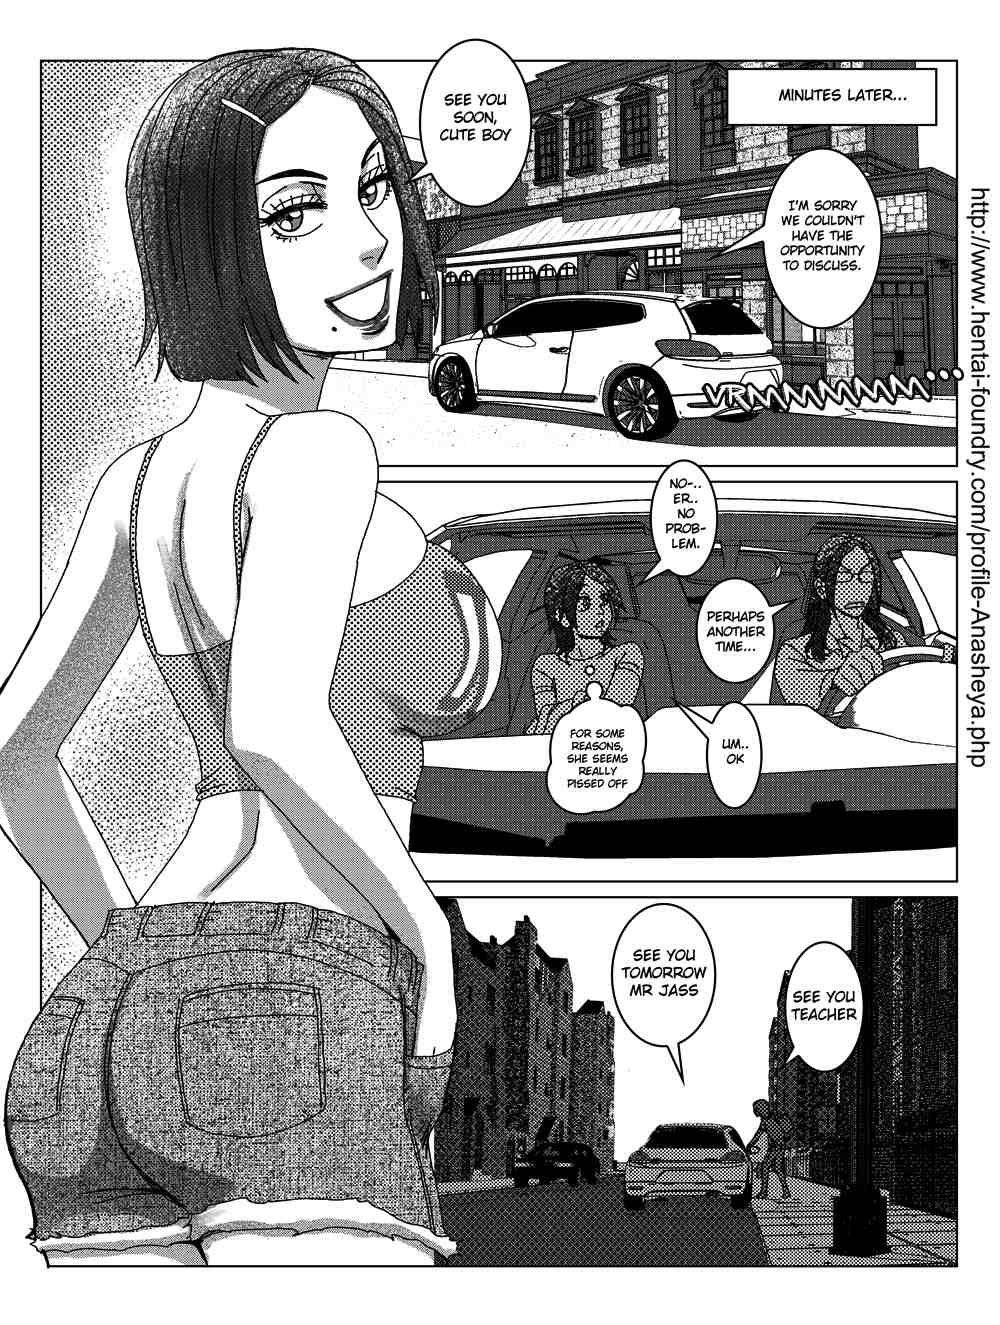 Read [anasheya] Anal Assault Lesson 1 Hentai Online Porn Manga And Doujinshi